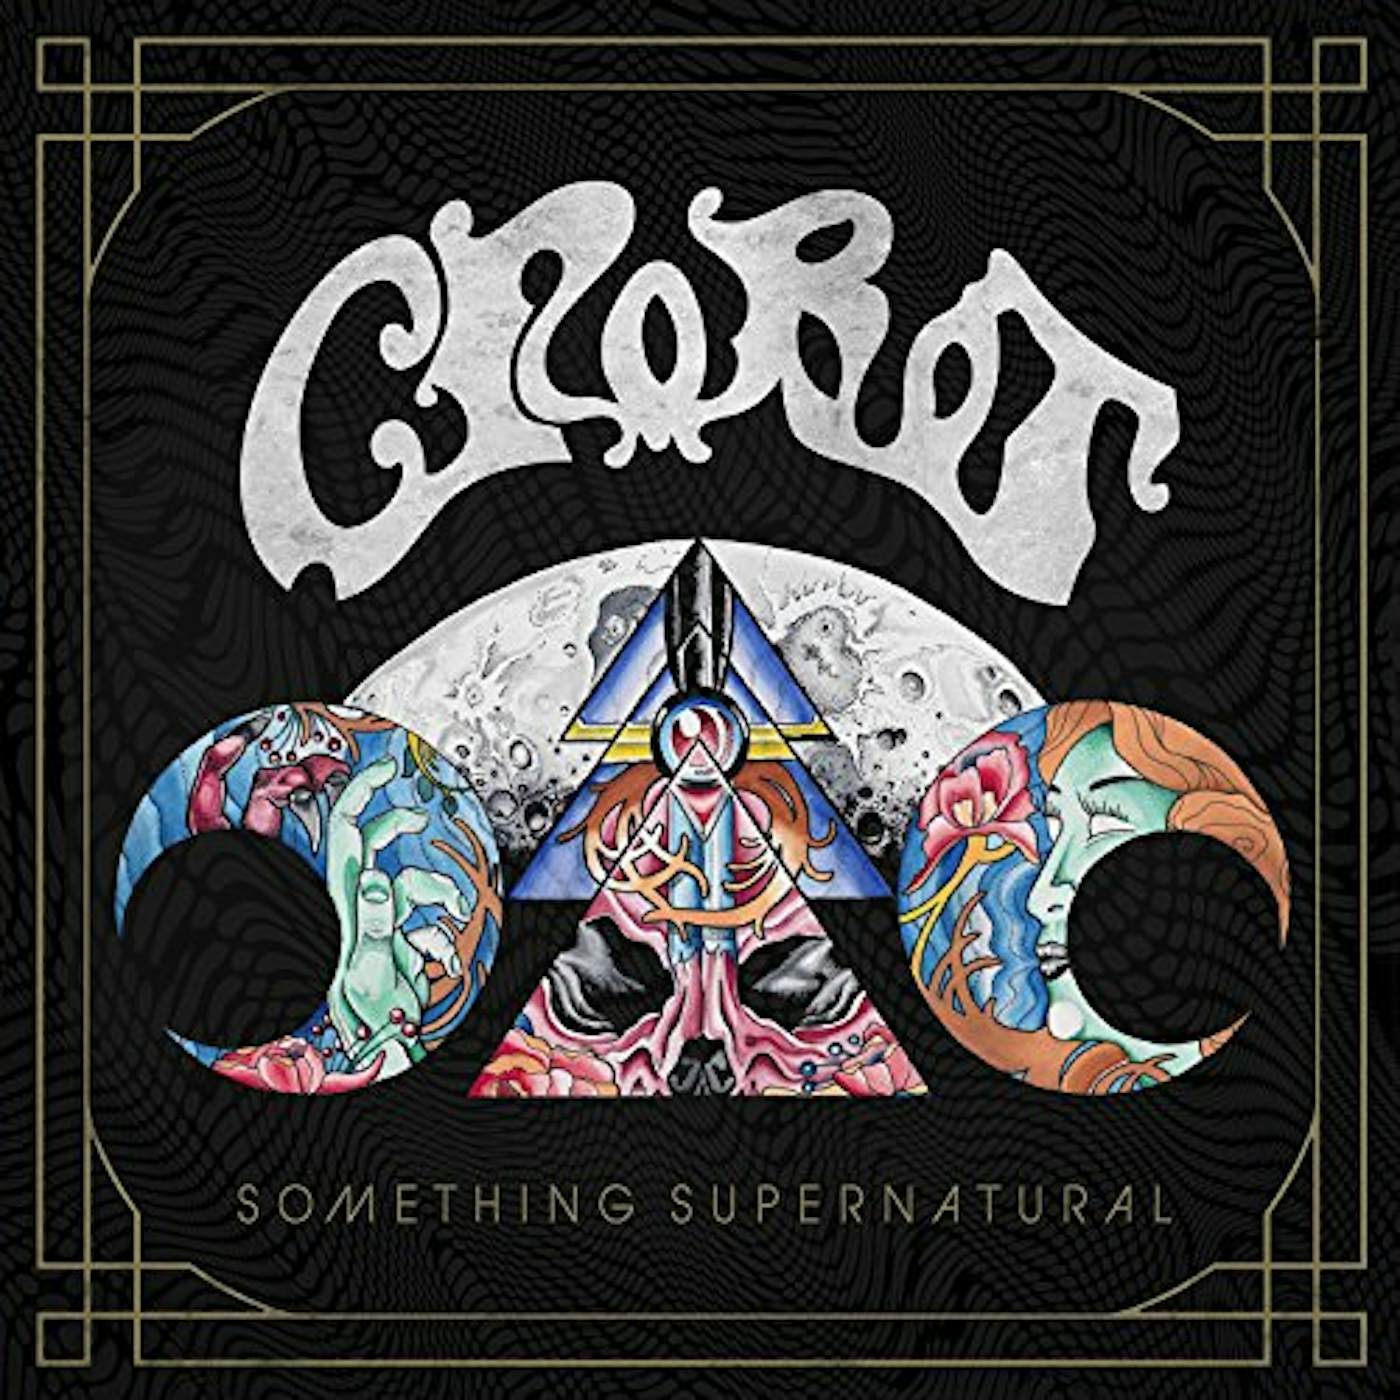 Crobot Something Supernatural Vinyl Record